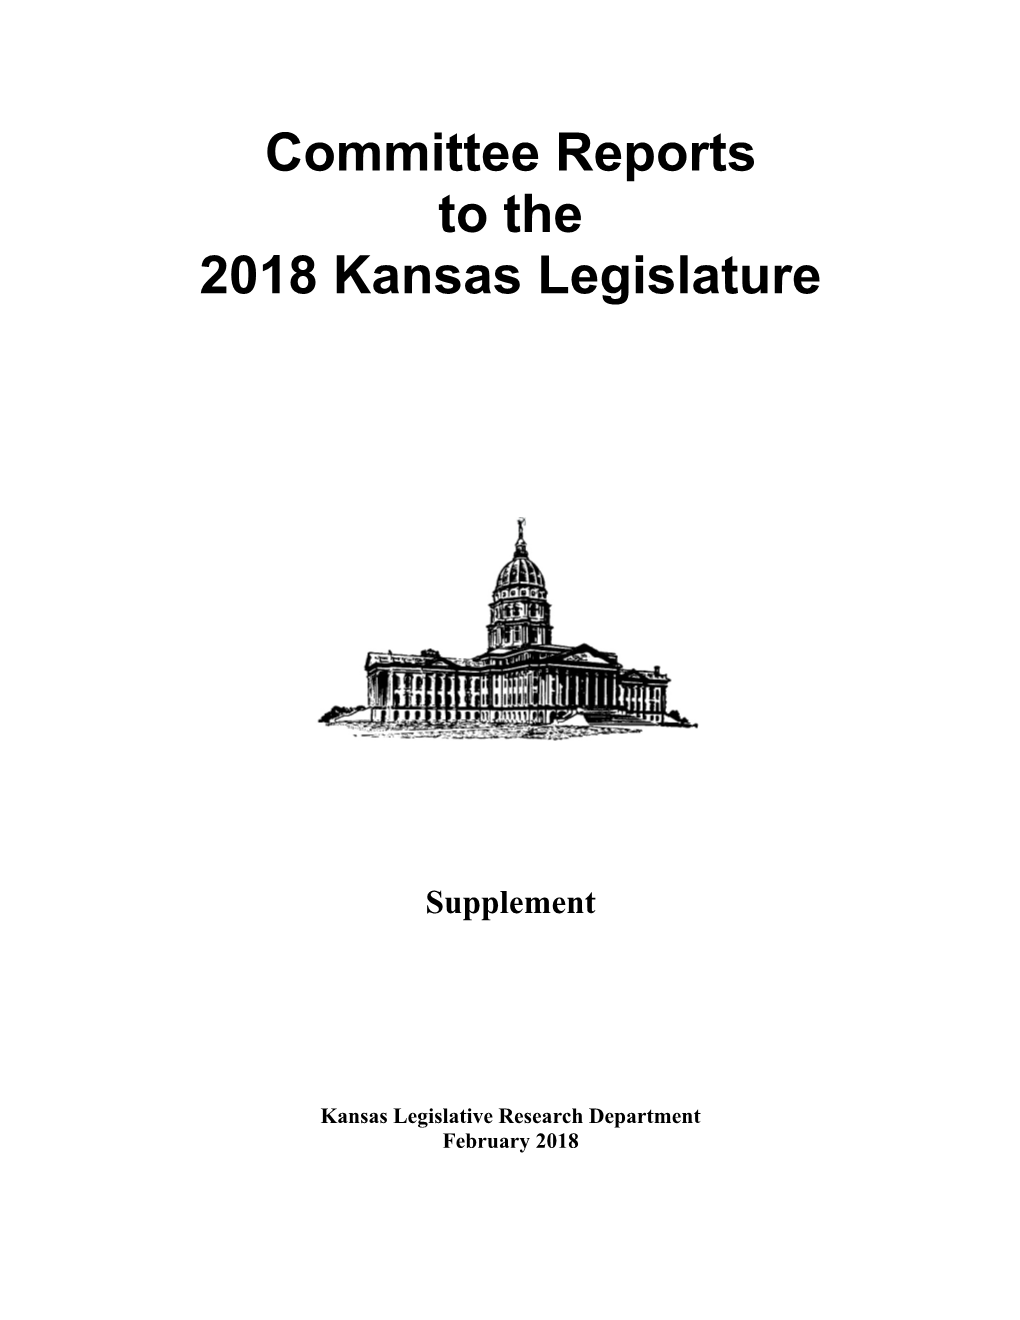 Committee Reports to the 2018 Kansas Legislature